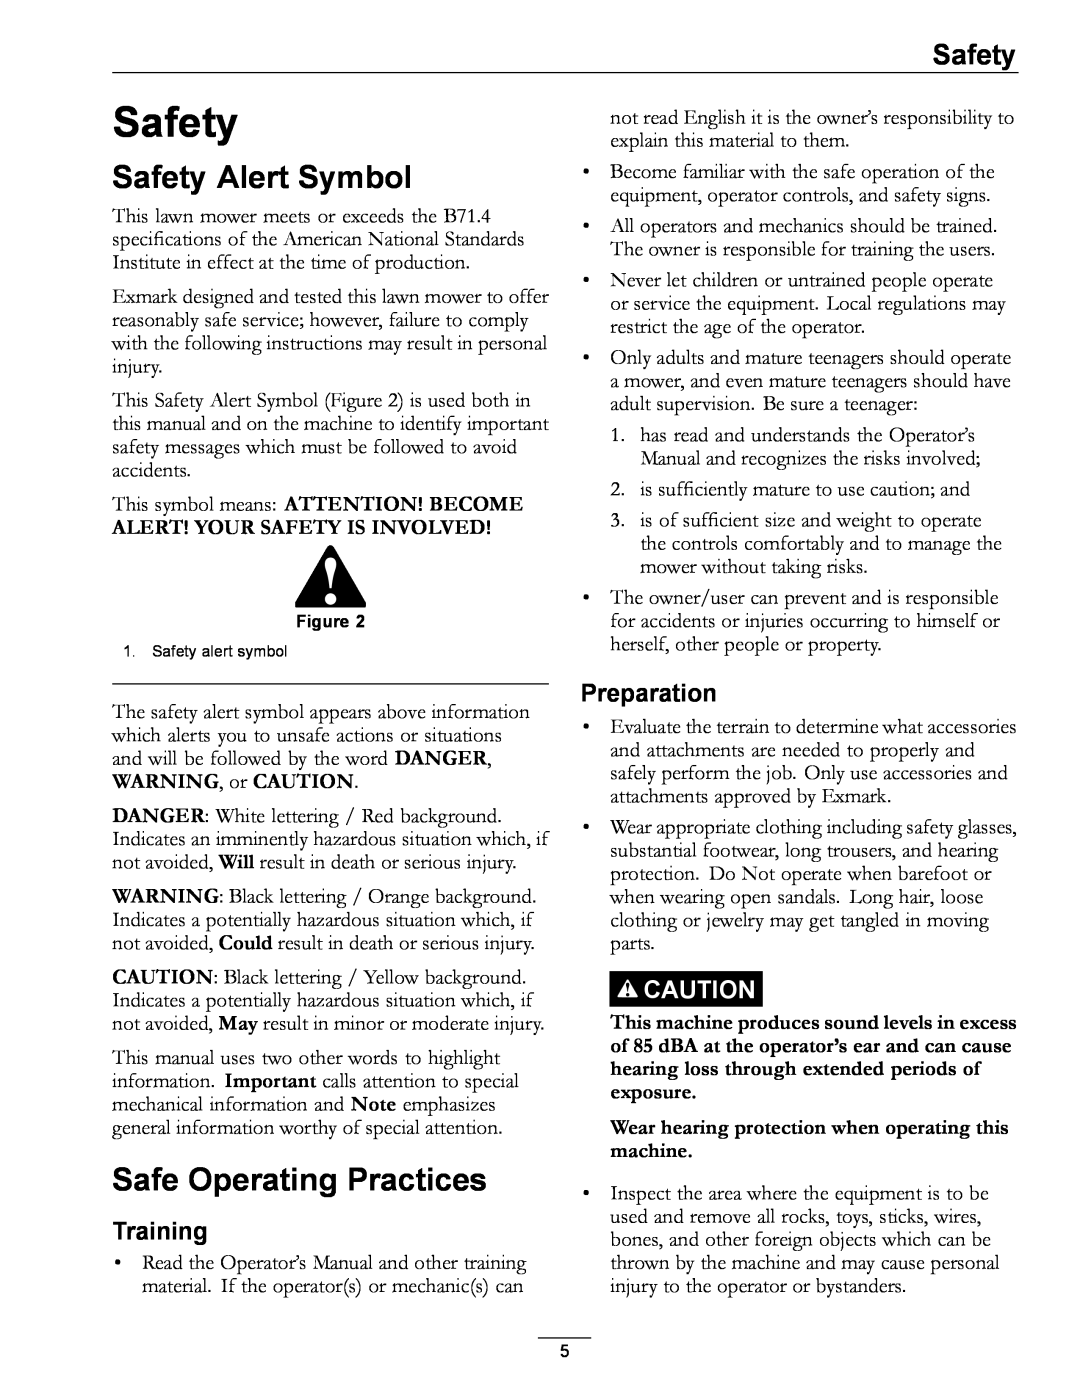 Exmark 4500-872 Safety Alert Symbol, Safe Operating Practices, Training, Preparation, Alert! Your Safety Is Involved 